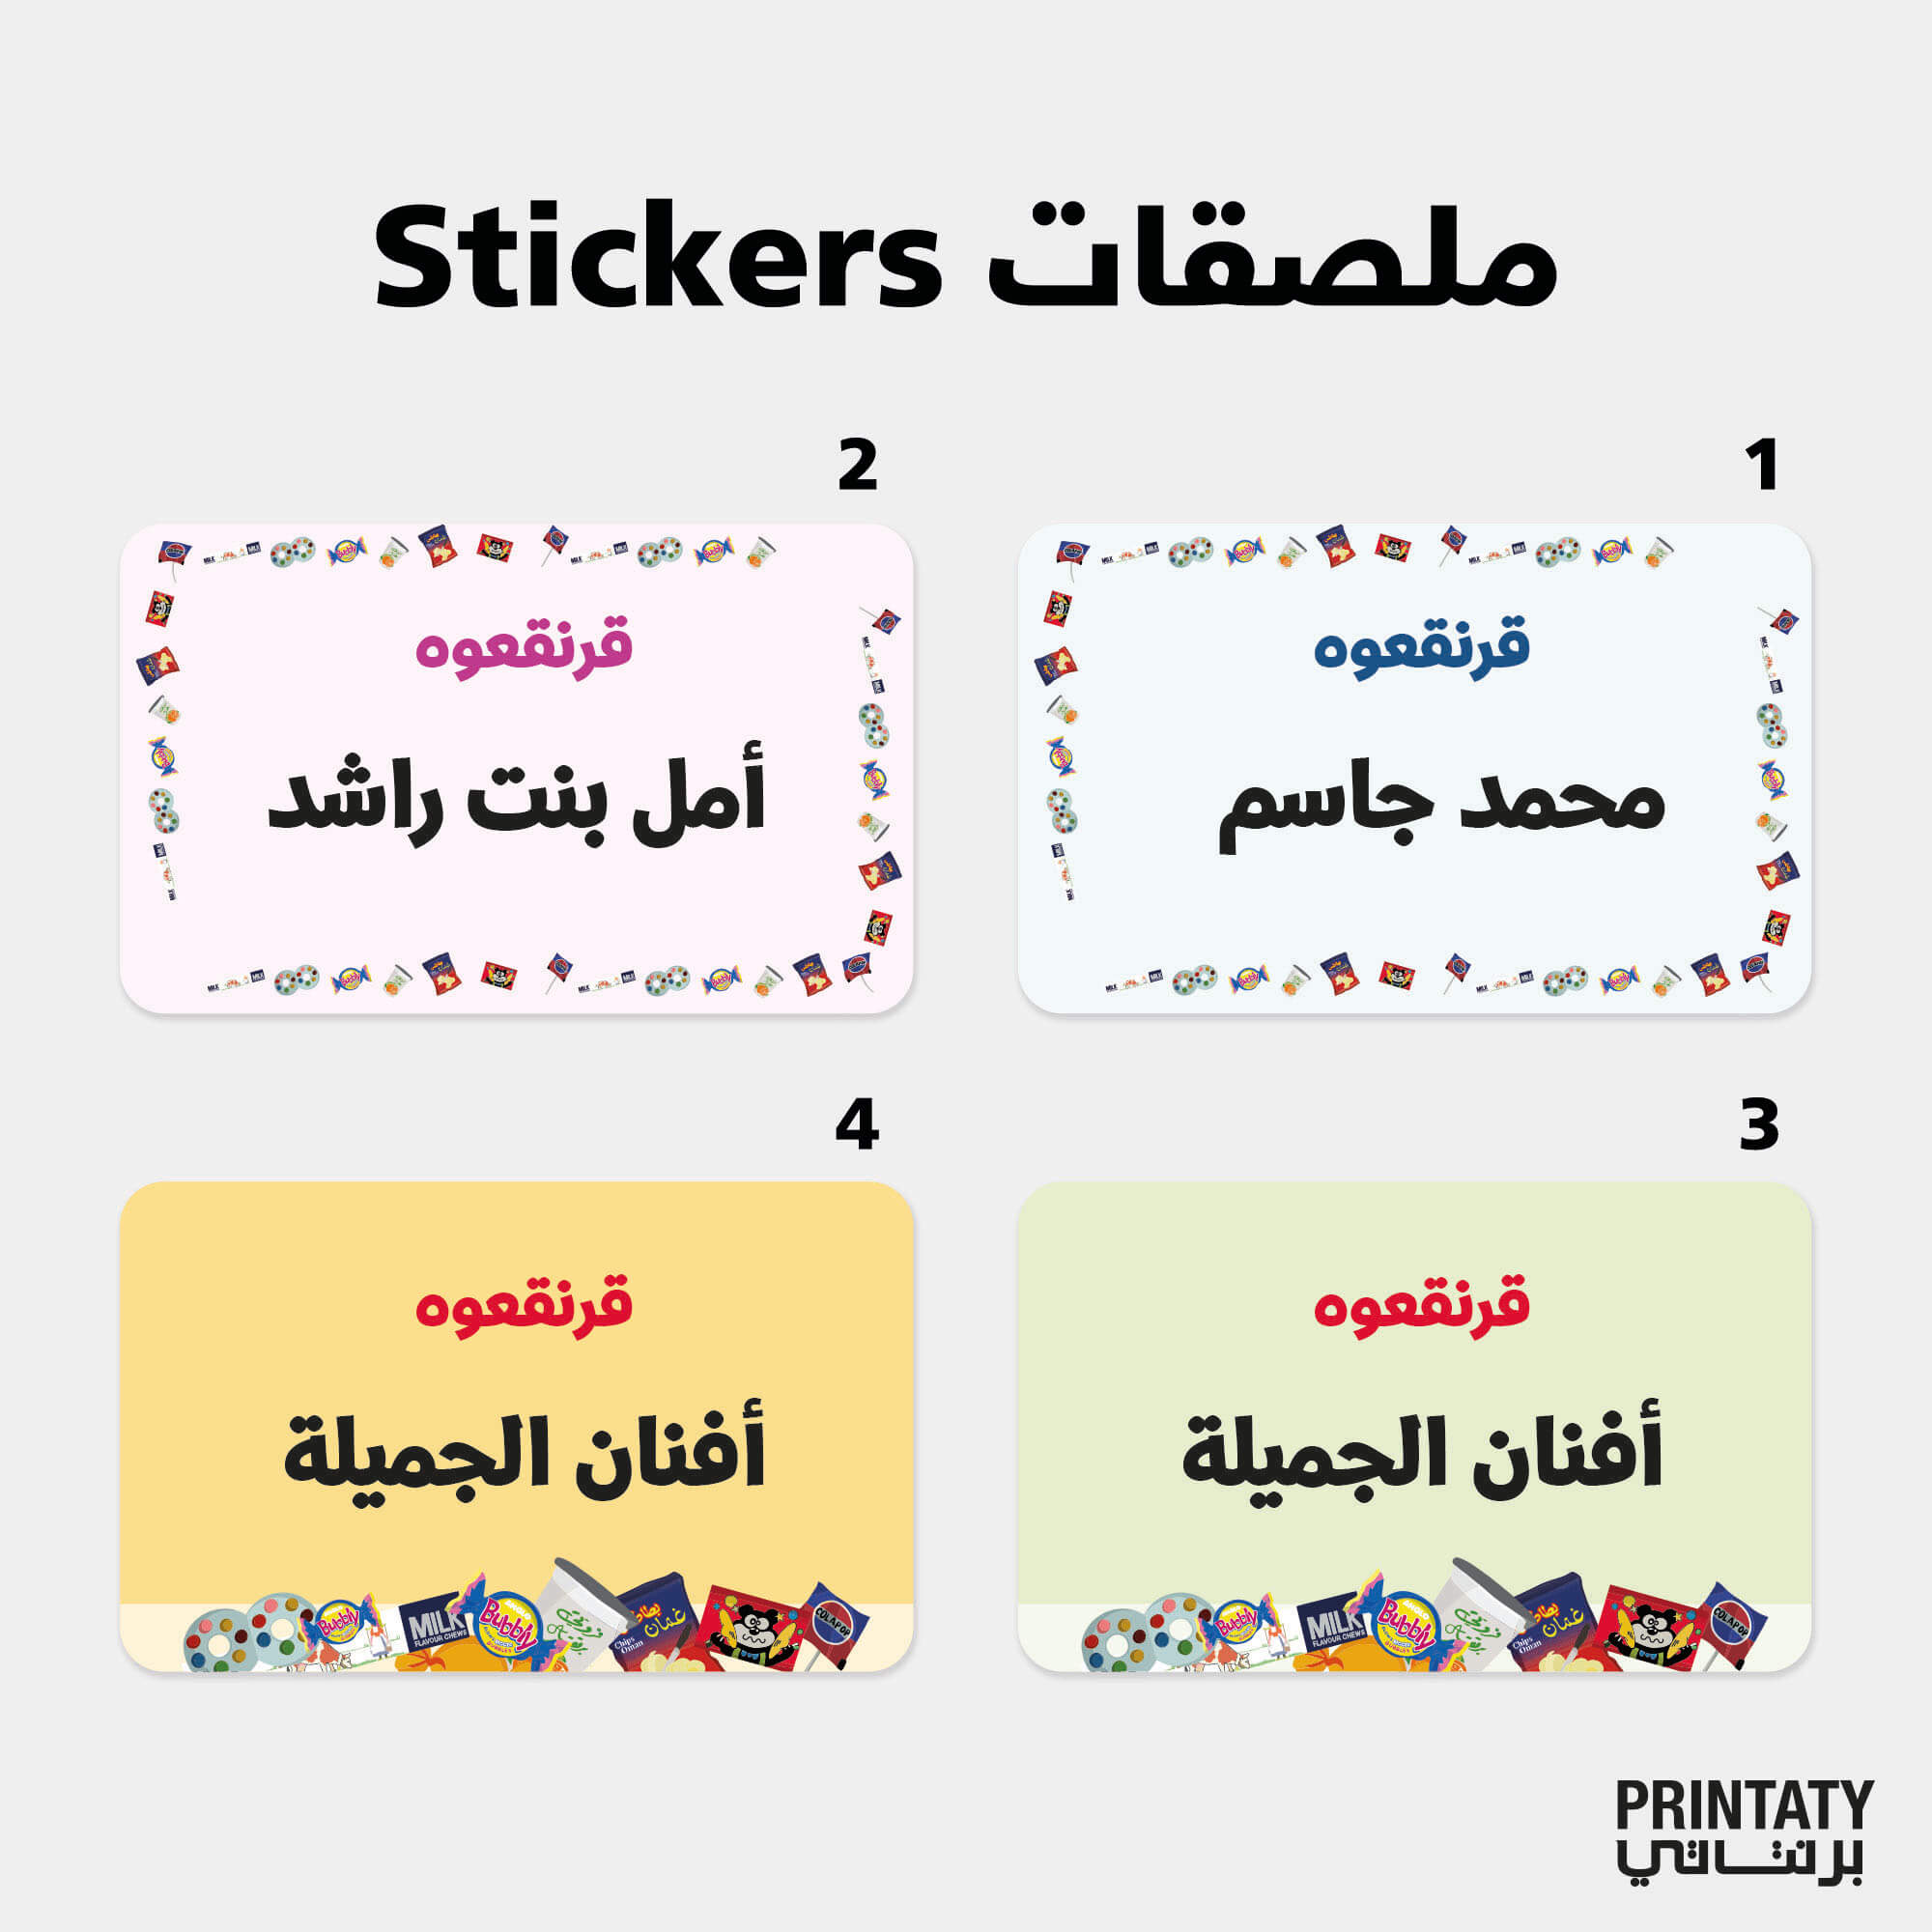 Garangao: 20 stickers with a name or phrase printed